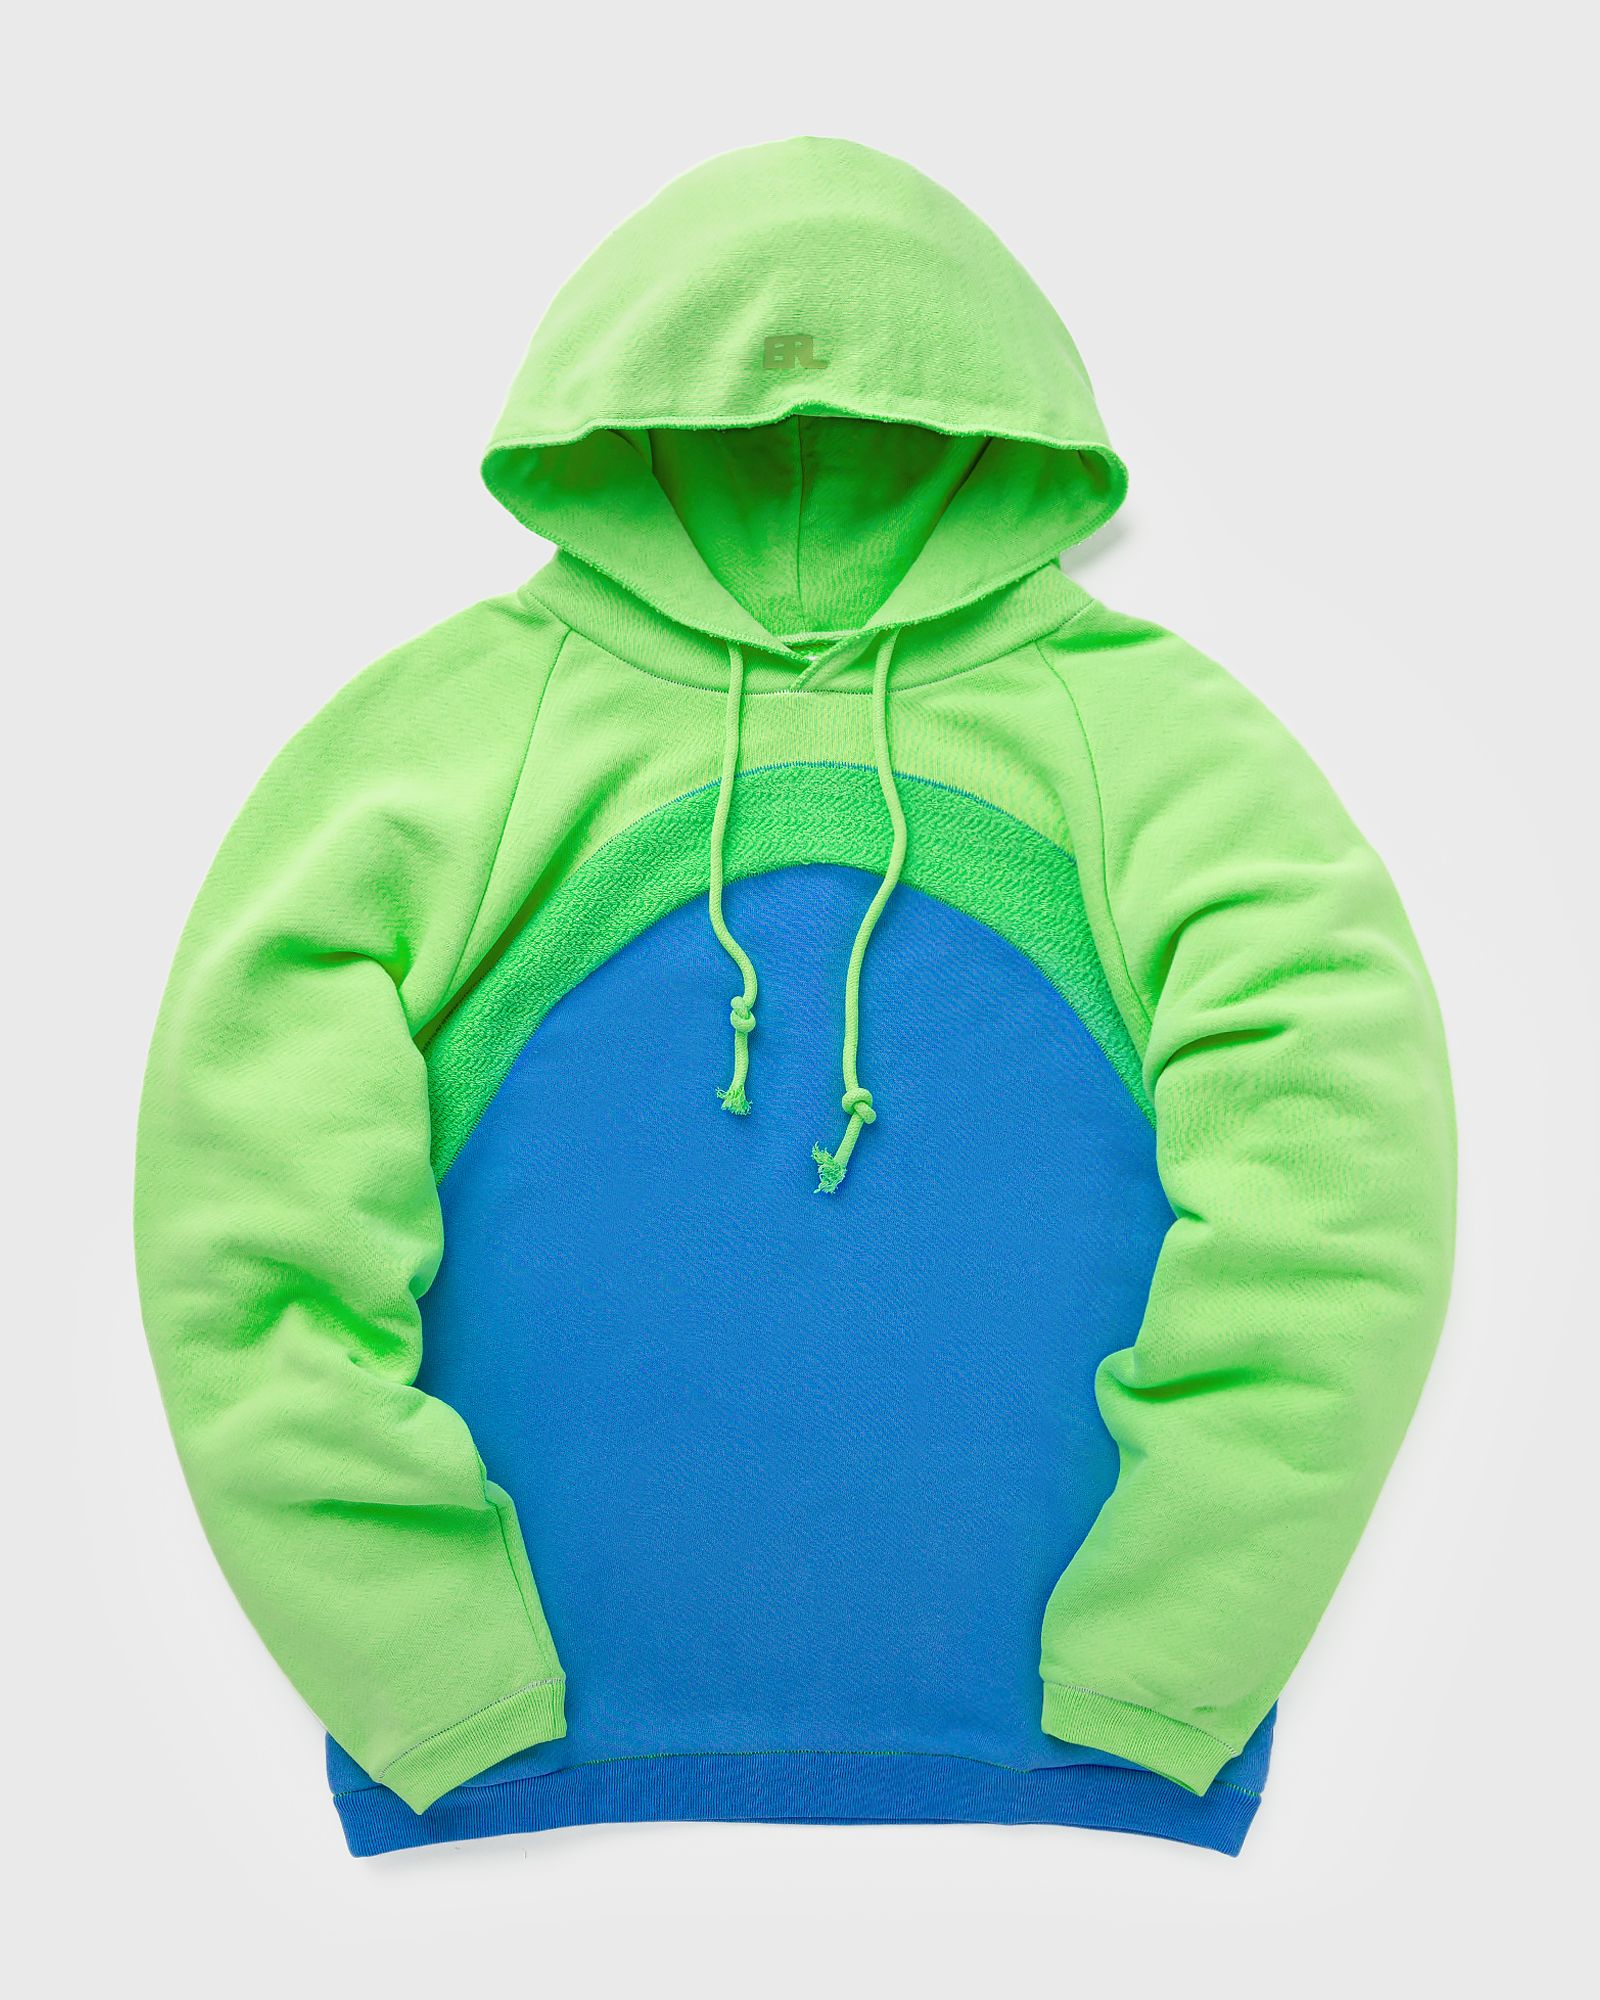 ERL - rainbow hoodie knit men hoodies blue|green in größe:xxl